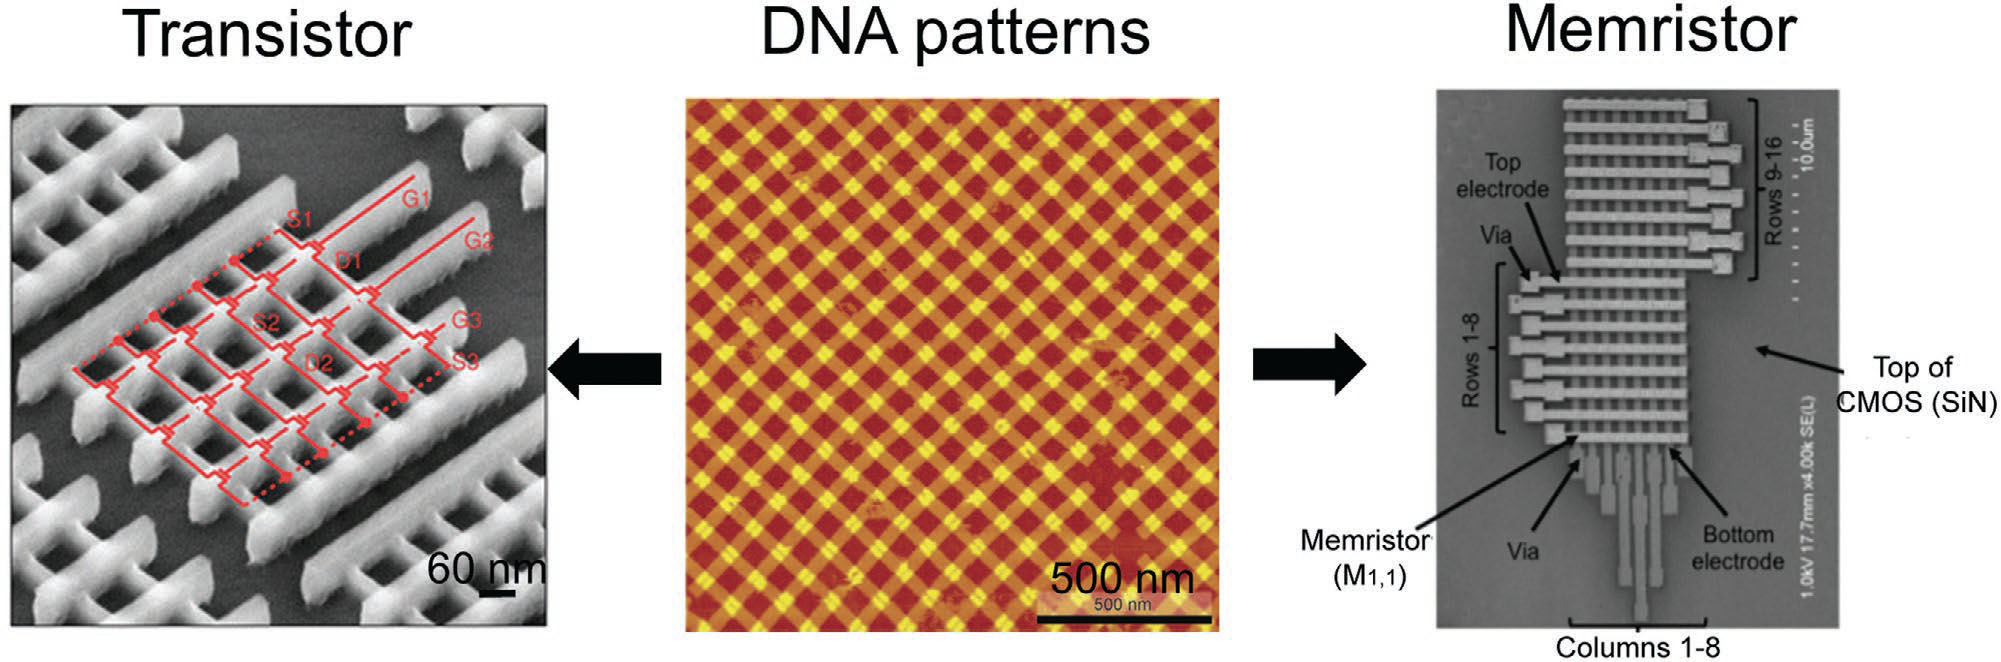 Similarity between nanoelectronics and memristors with DNA nanopatterns